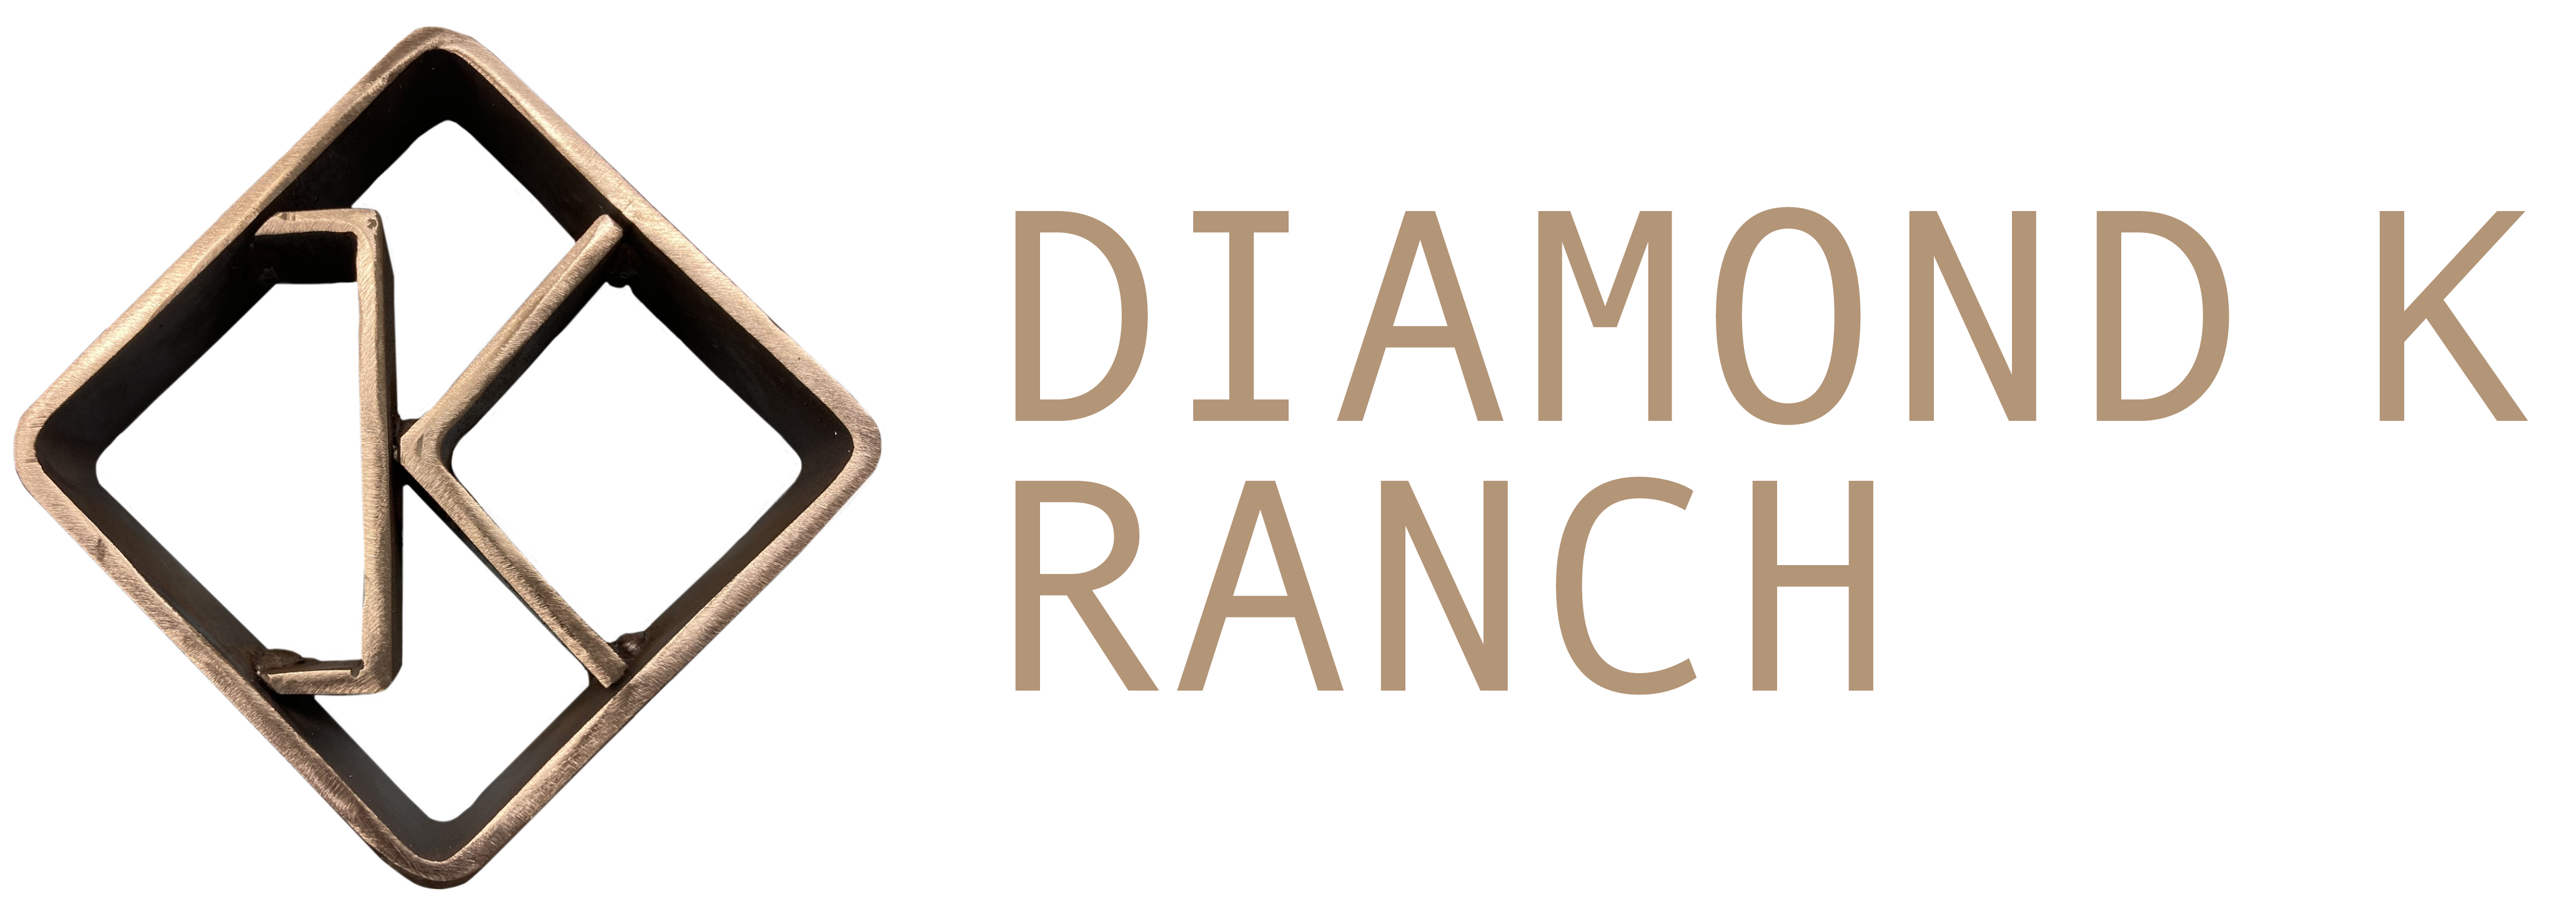 Diamond K Ranch logo